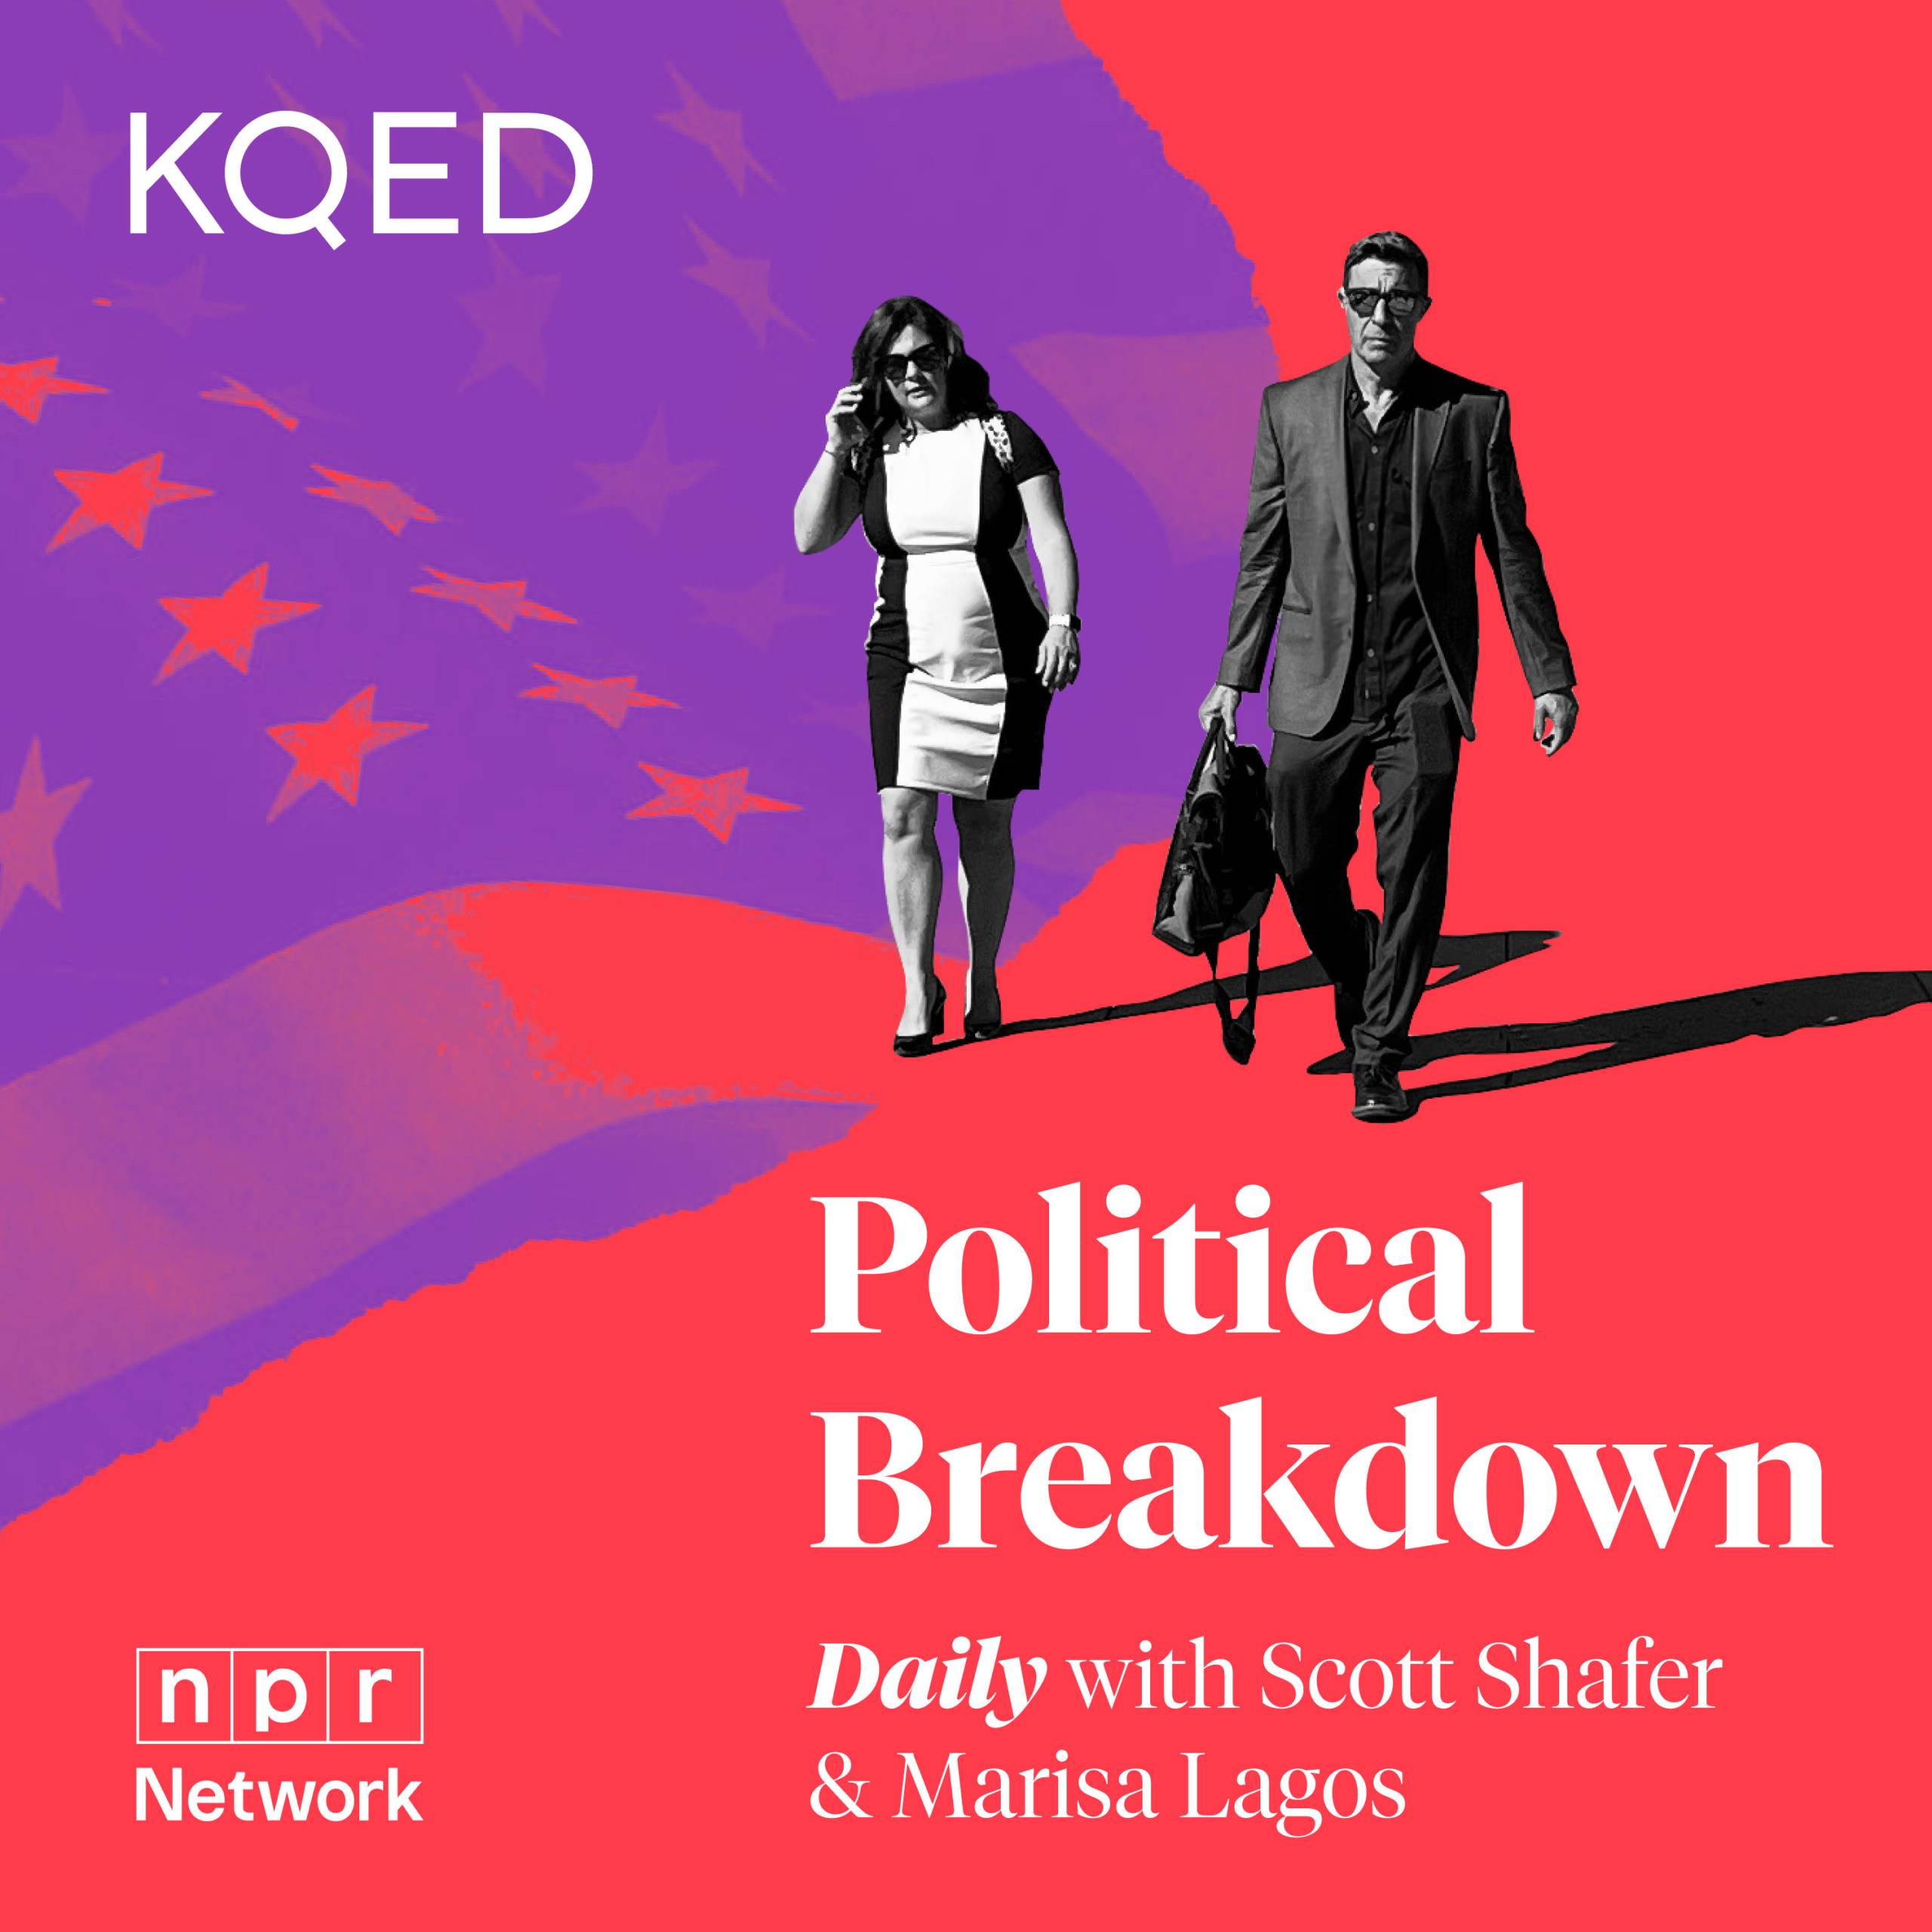 KQED Political Breakdown